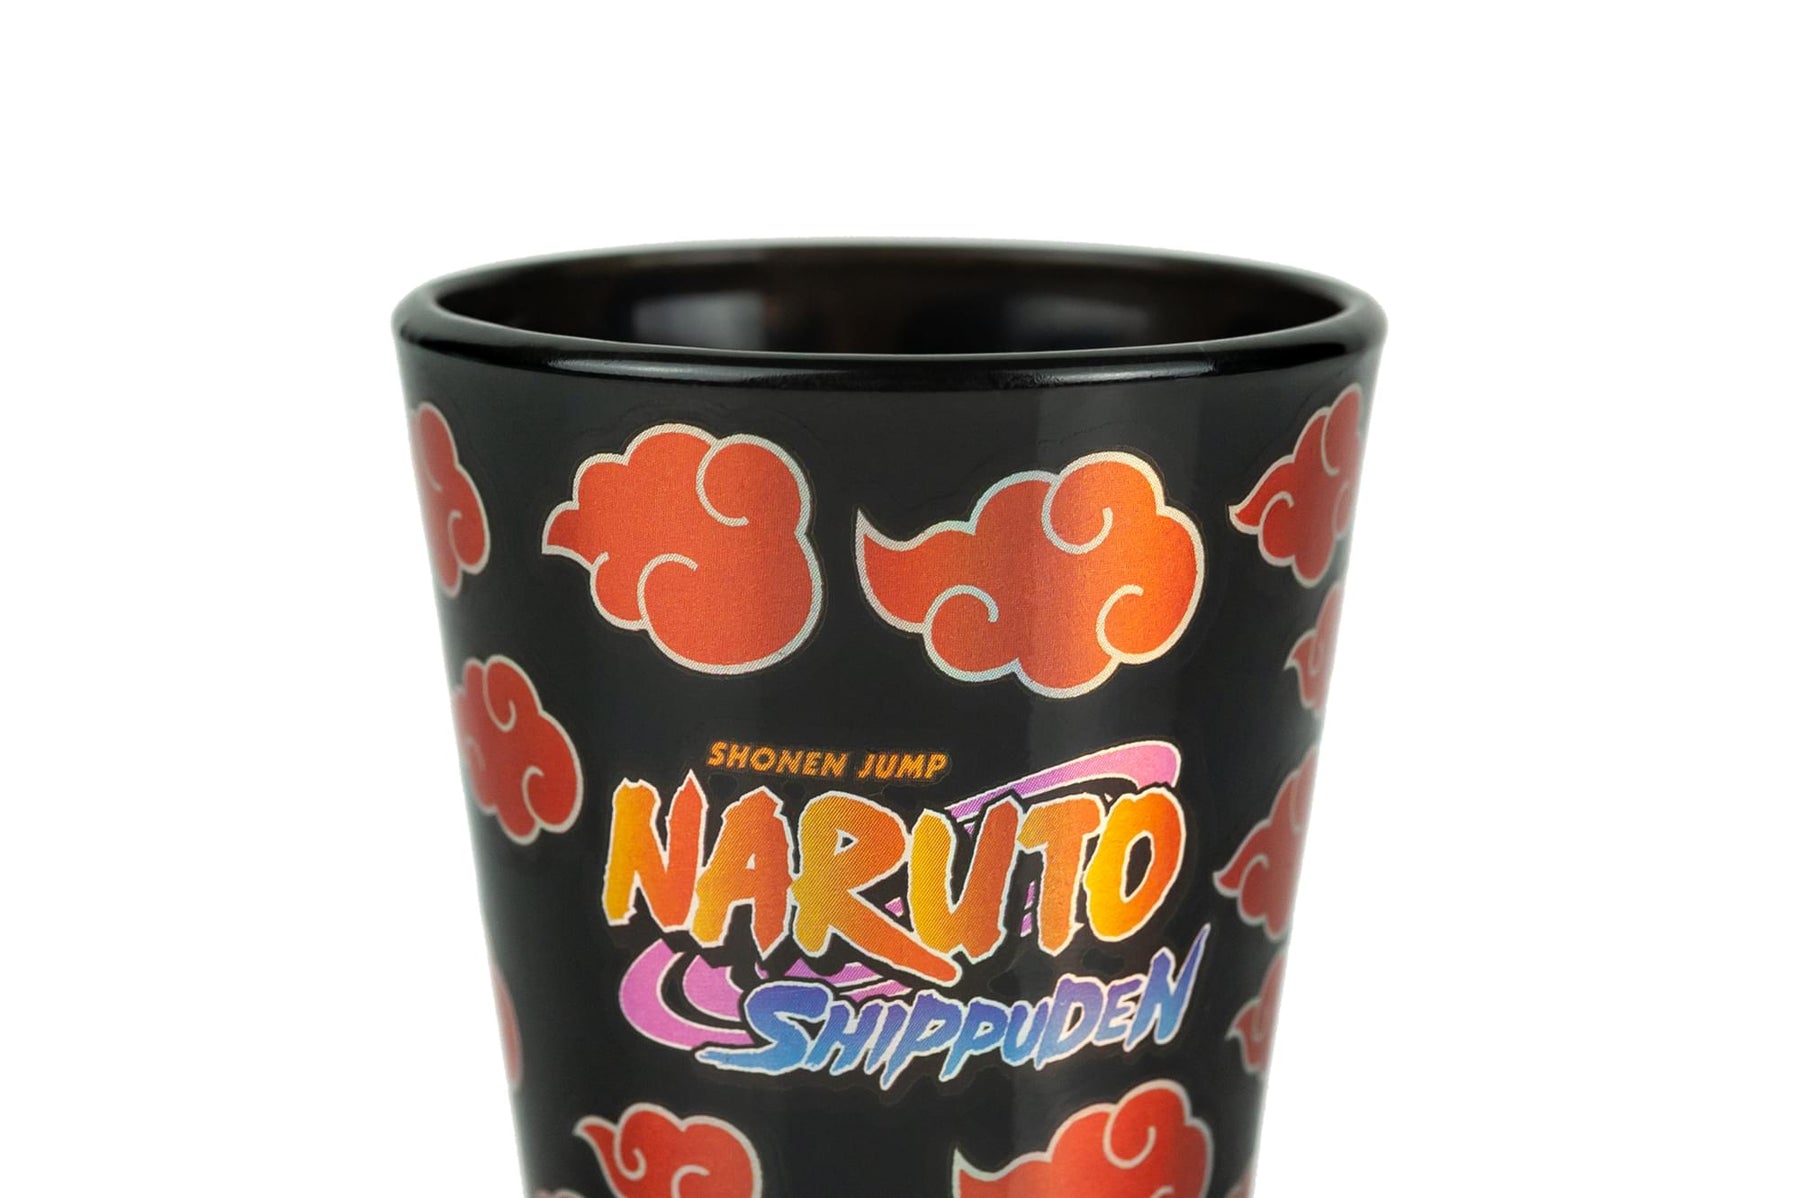 Naruto: Shippuden Akatsuki Emblem Red Rain Cloud Shot Glass | Holds 2 Ounces